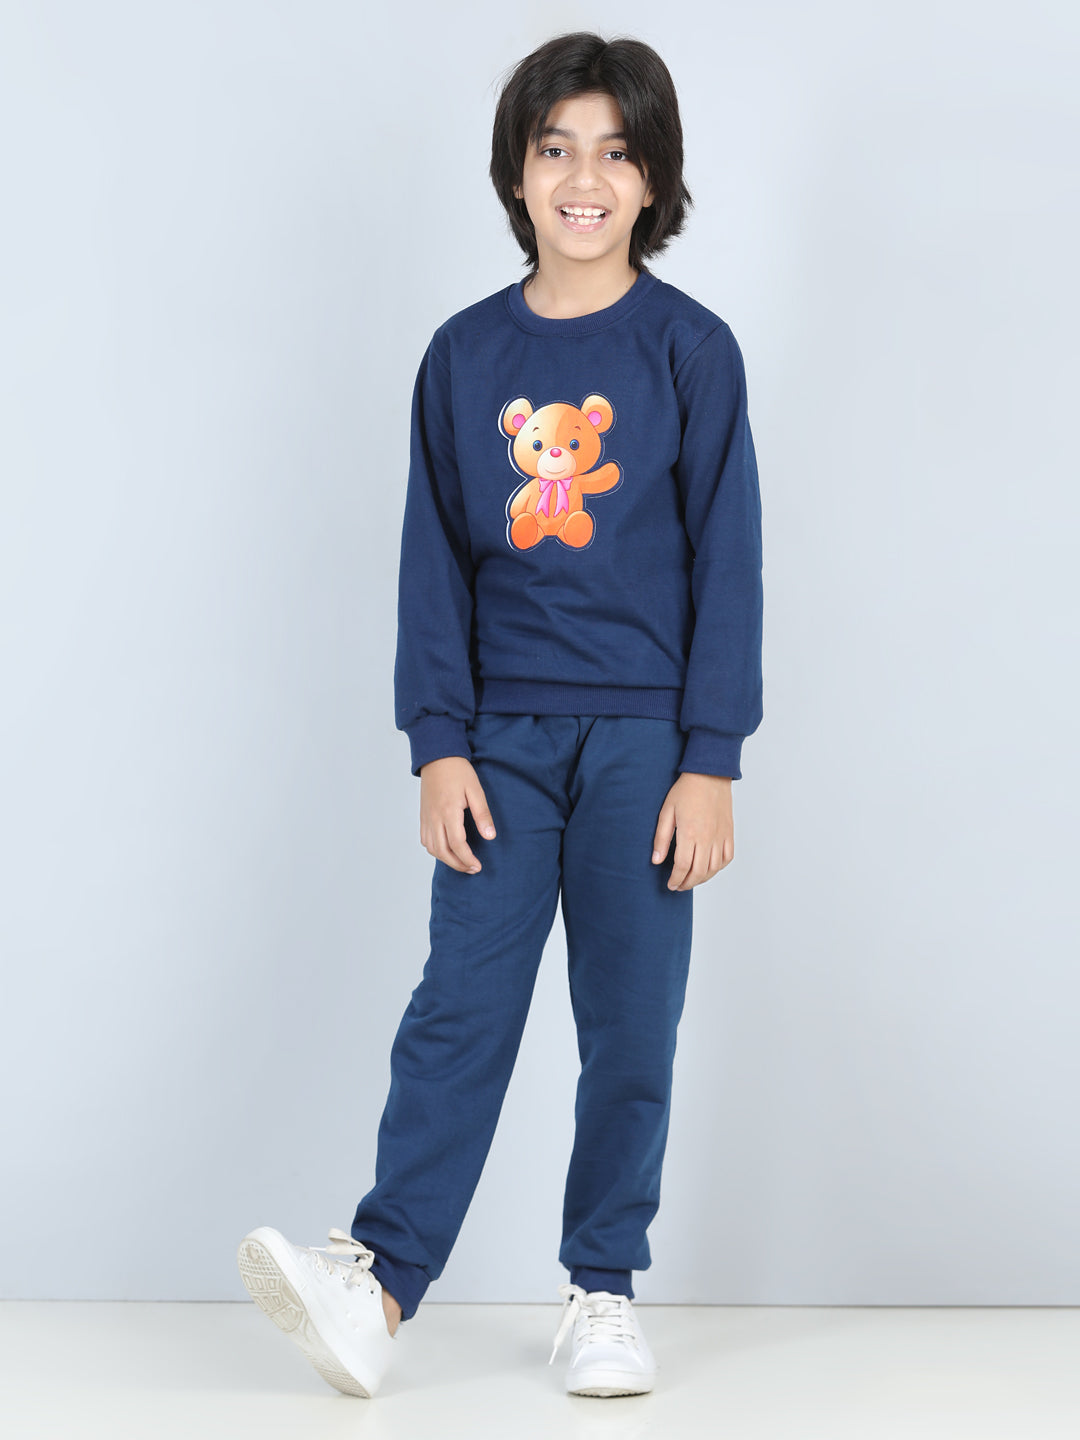 Cutiekins Bear Patch Sweatshirt & Jogger Clothing Set-Navy Blue